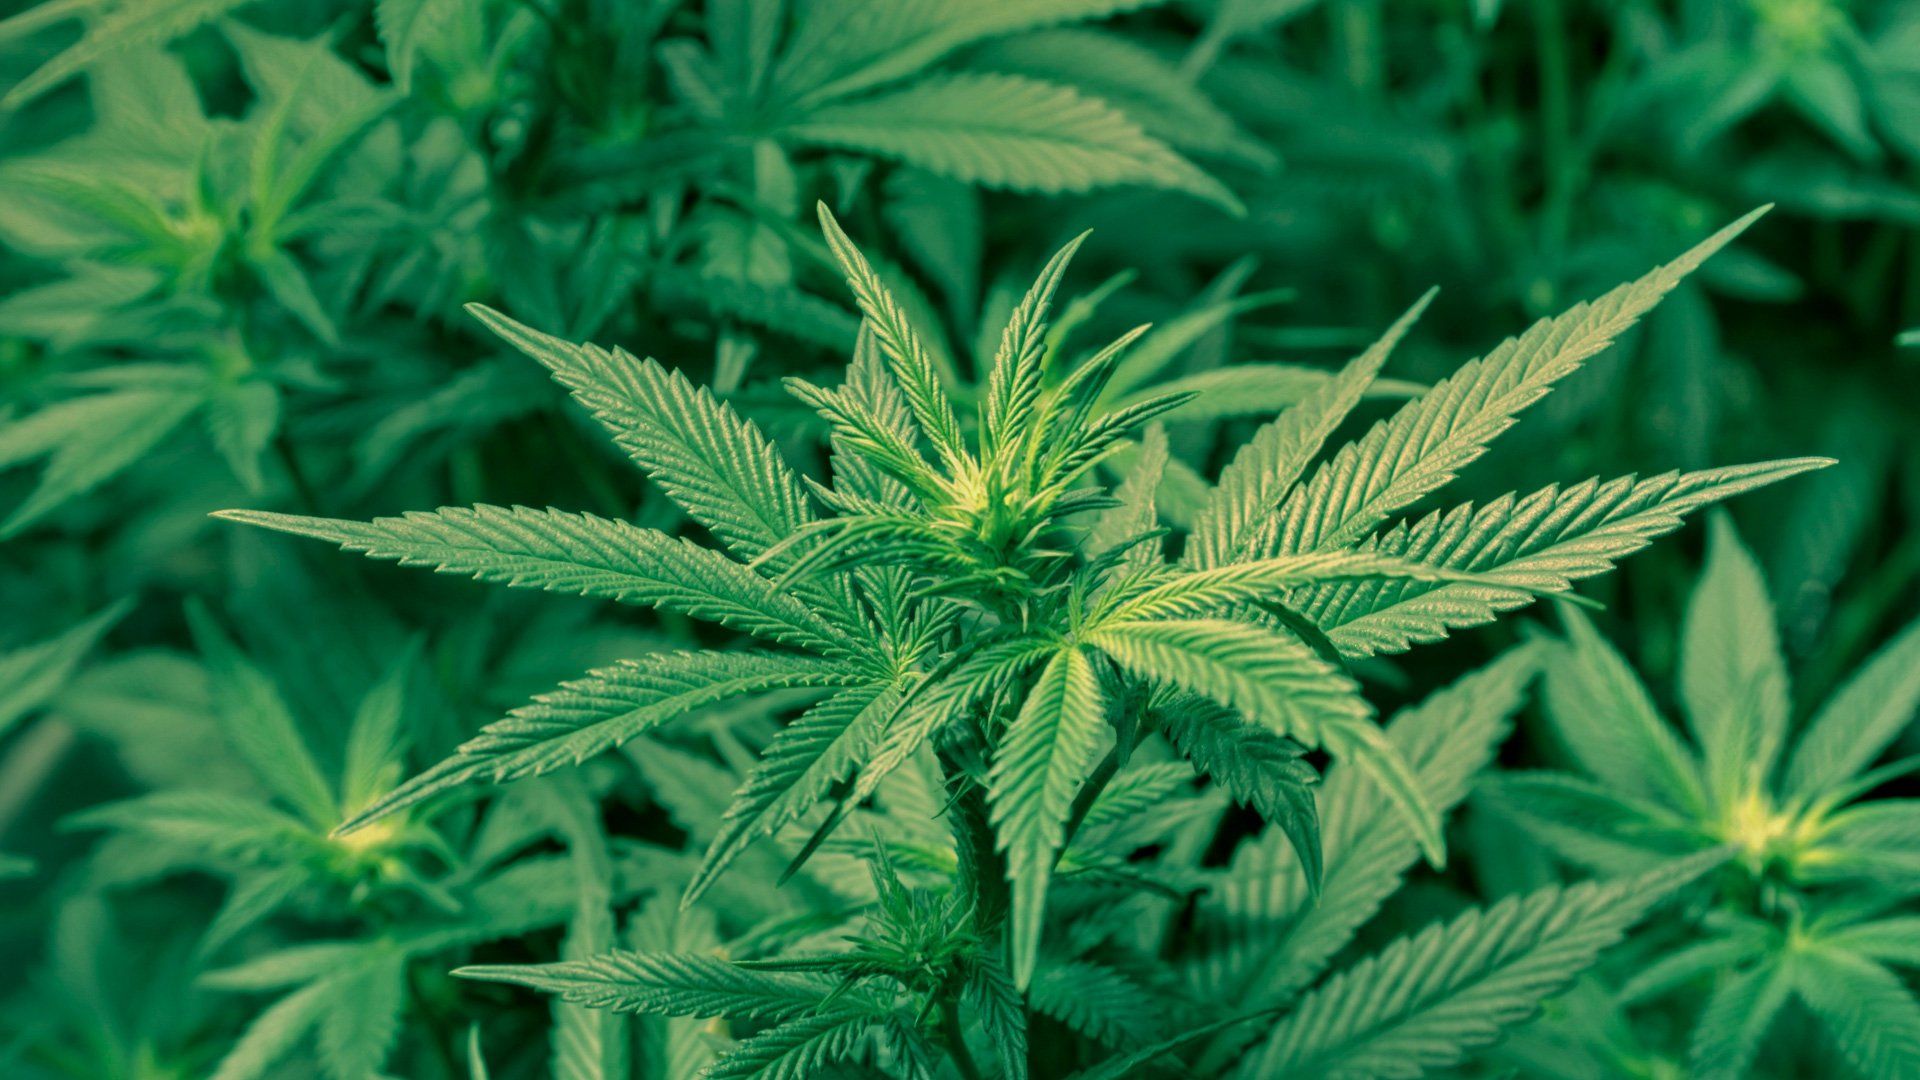 A close up of some marijuana plants - Weed